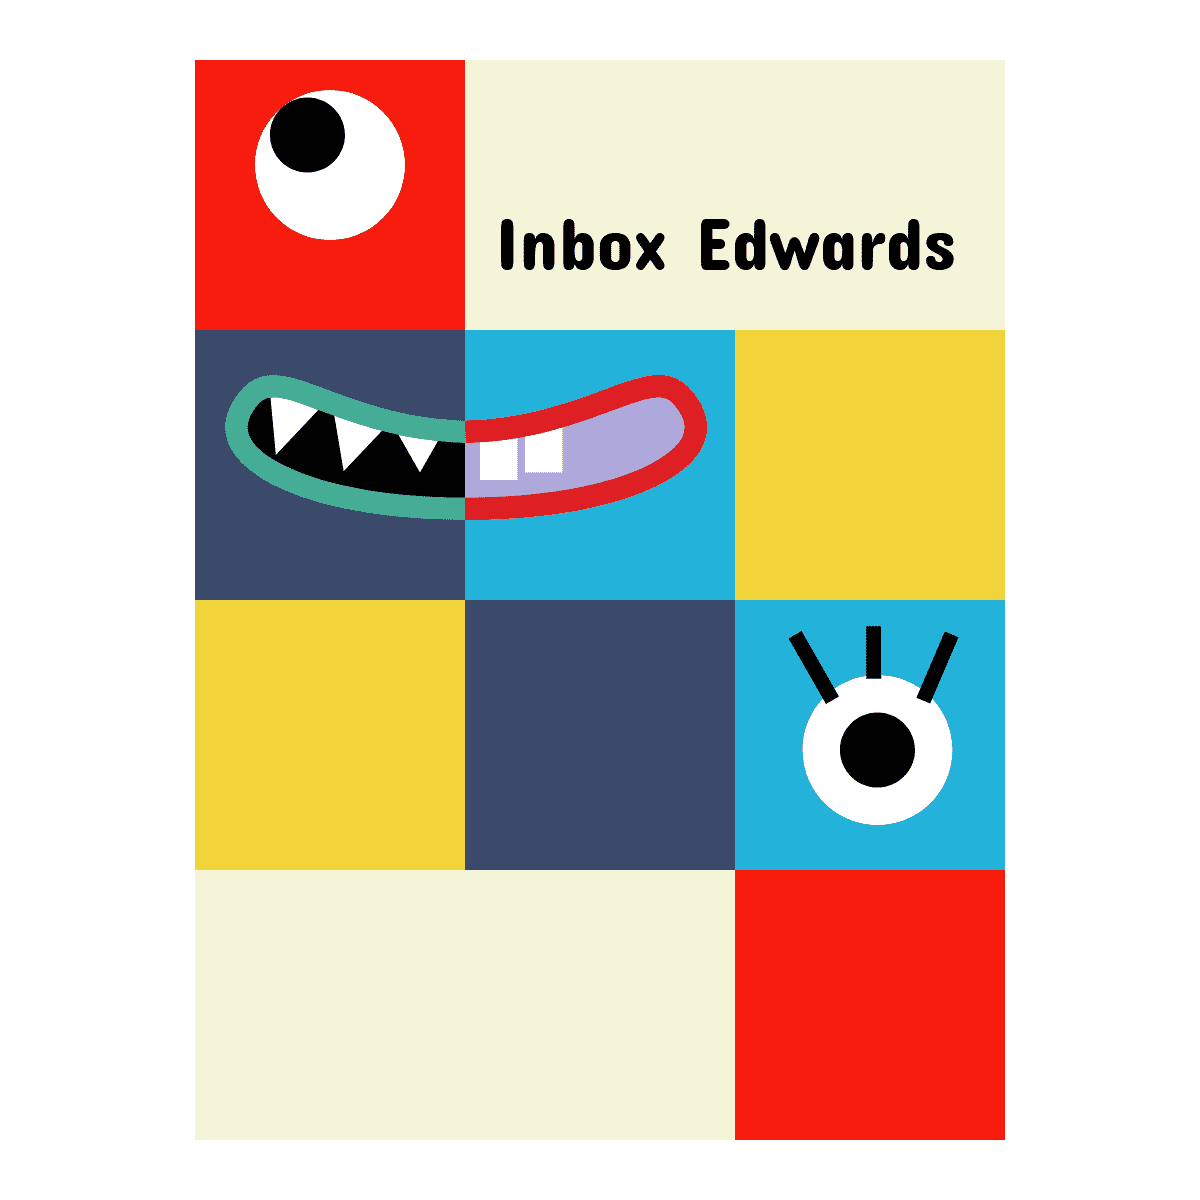 Inbox Edwards